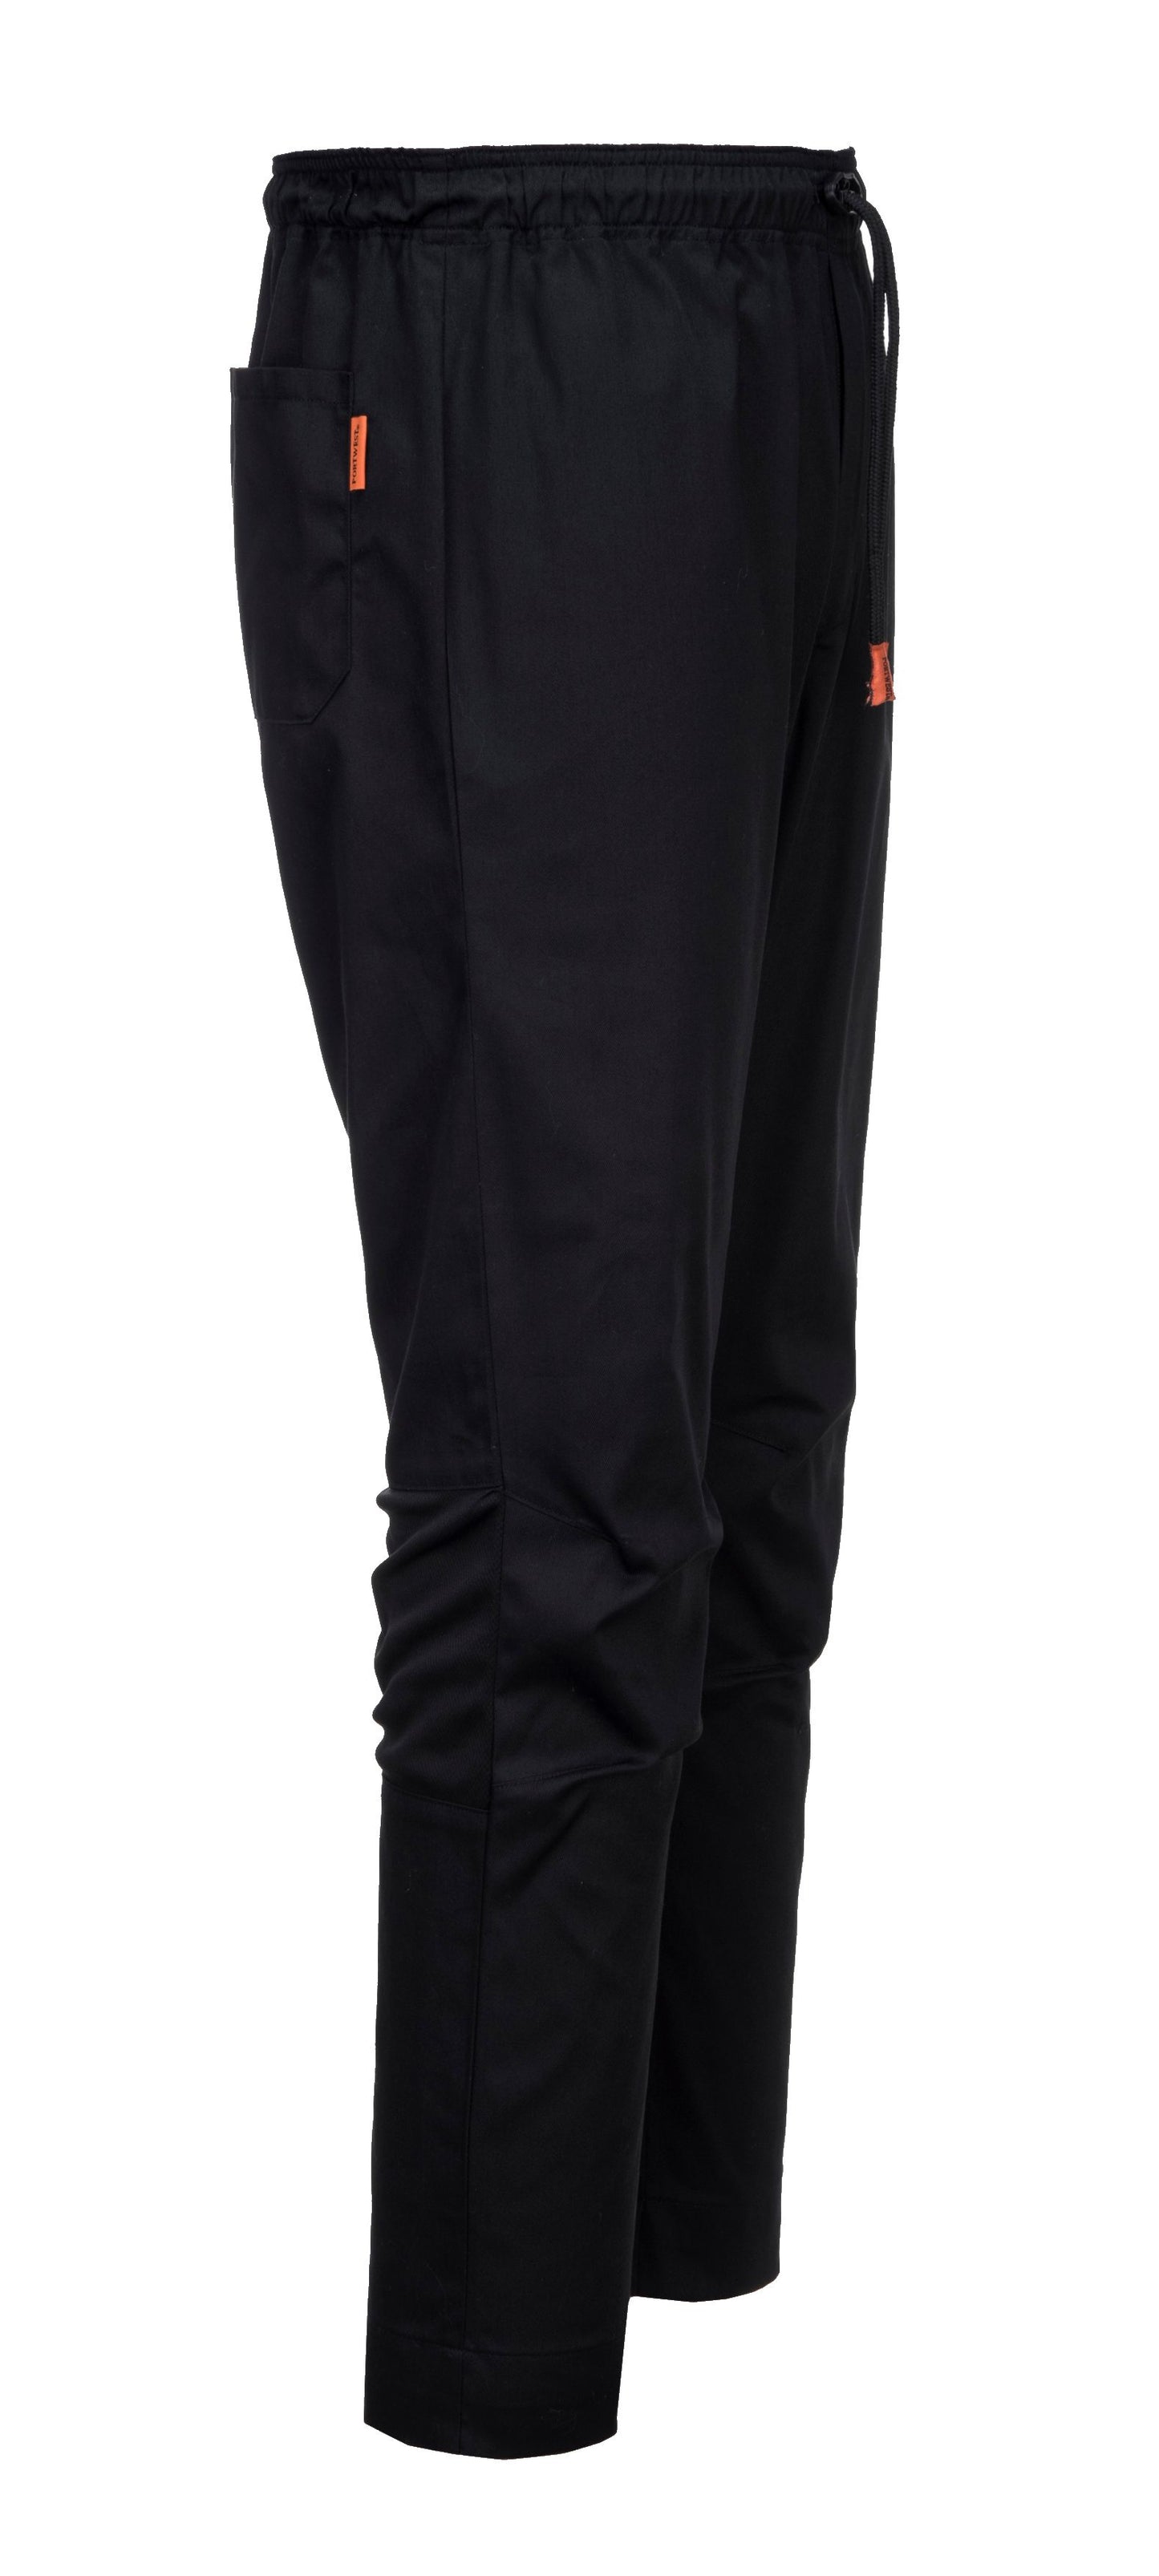 MeshAir Pro Pants Black - C073